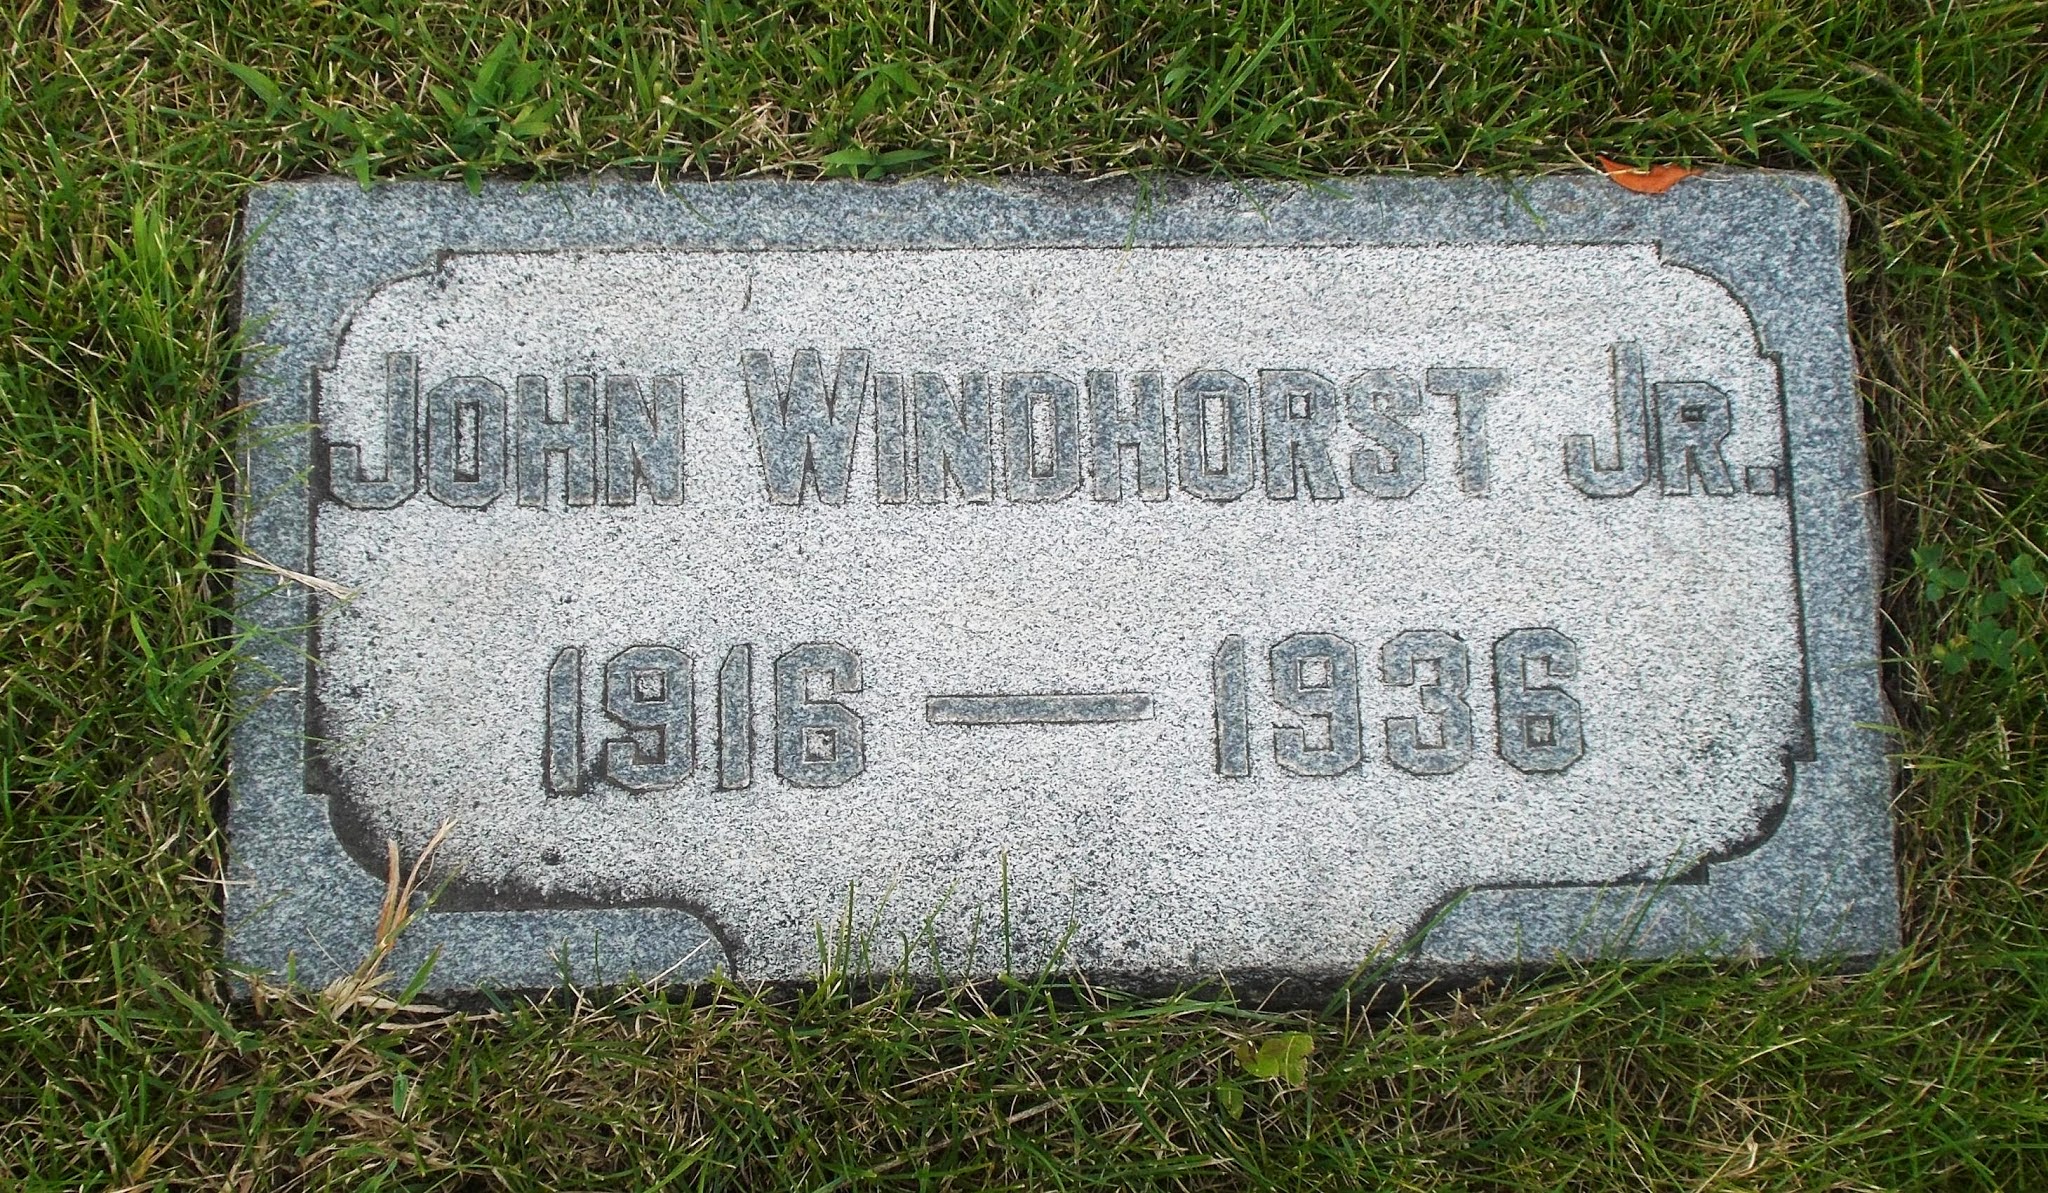 John Windhorst, Jr